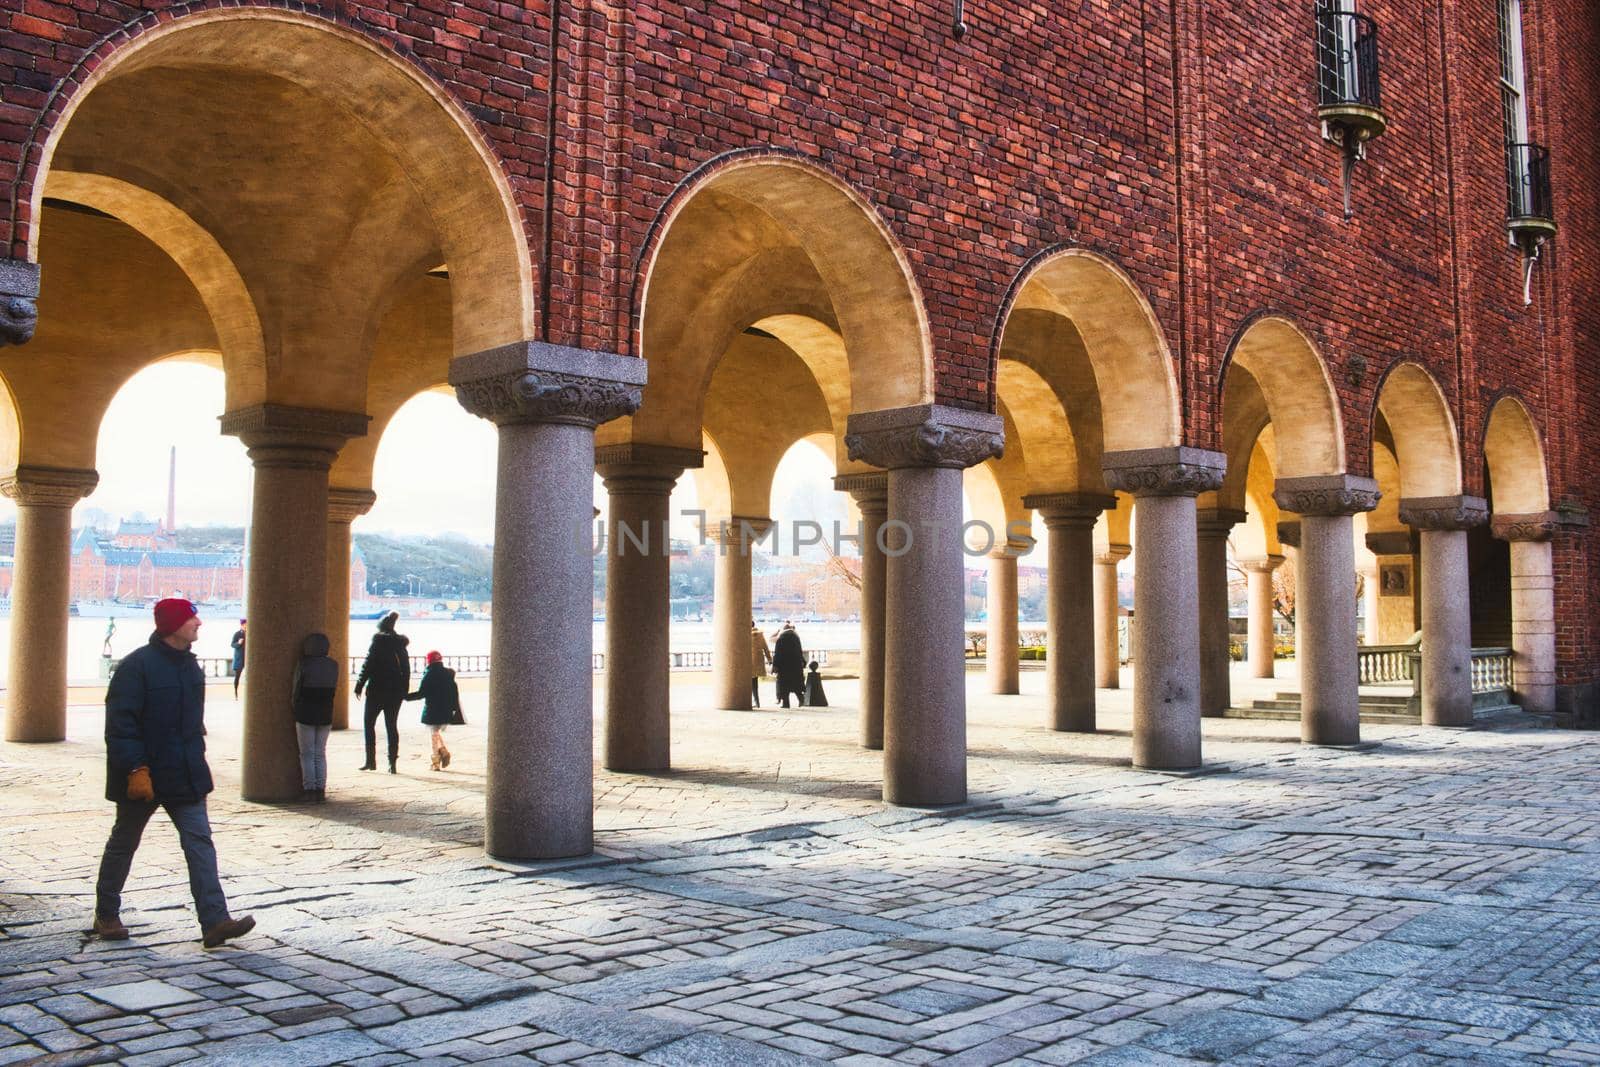 02 Feb 2019 - Stockholm, Sweden: Arches at City Hall in Kungsholmen island, Stockholm, Sweden by tennesseewitney